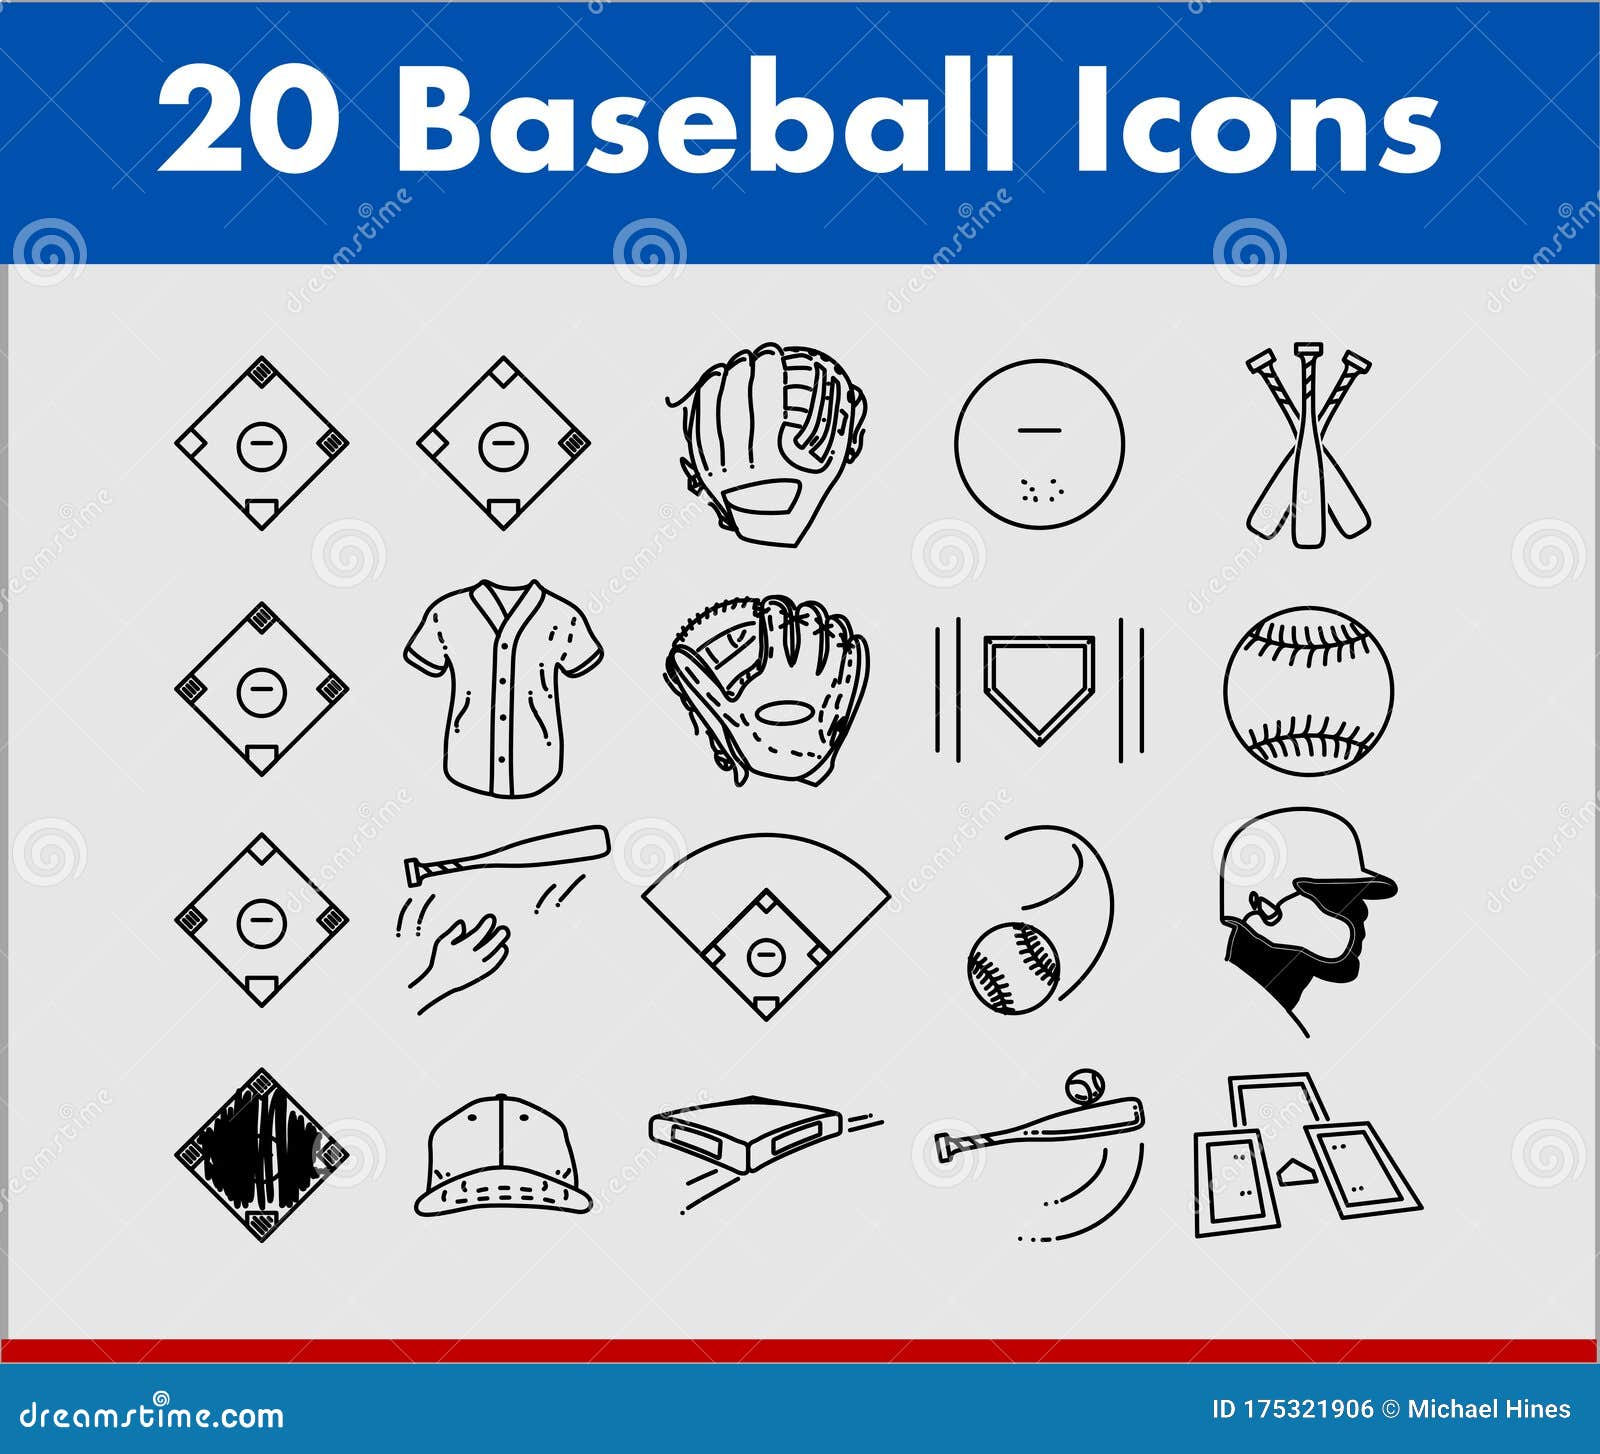 28-baseball-scoring-symbols